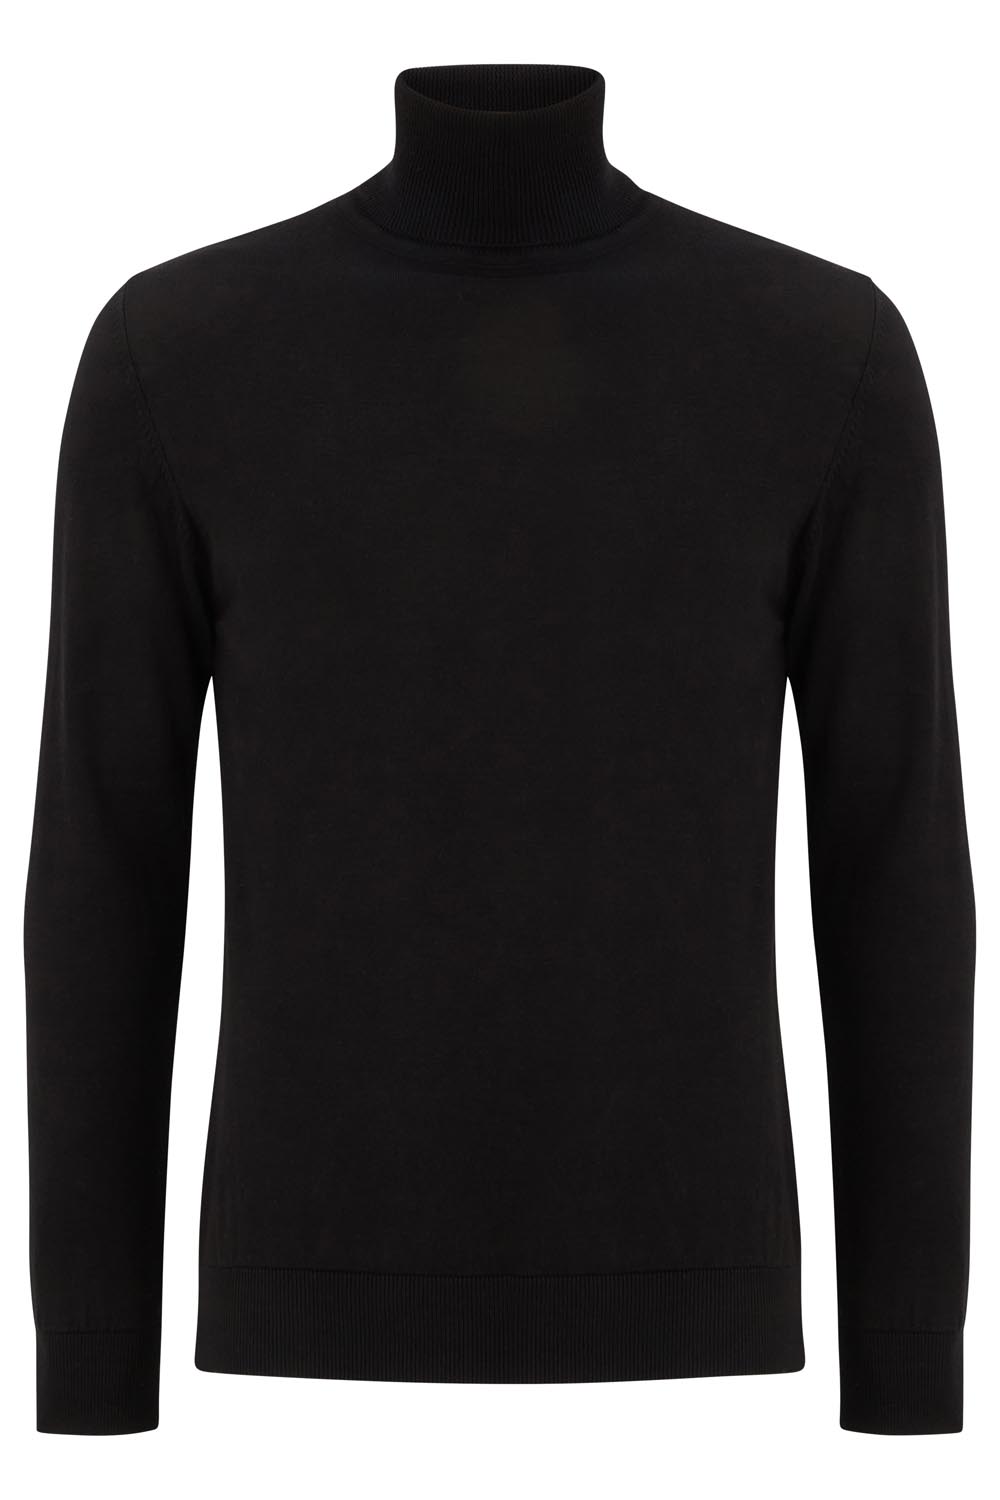 Dax Black Rollneck Sweater - Tom Murphy's Formal and Menswear